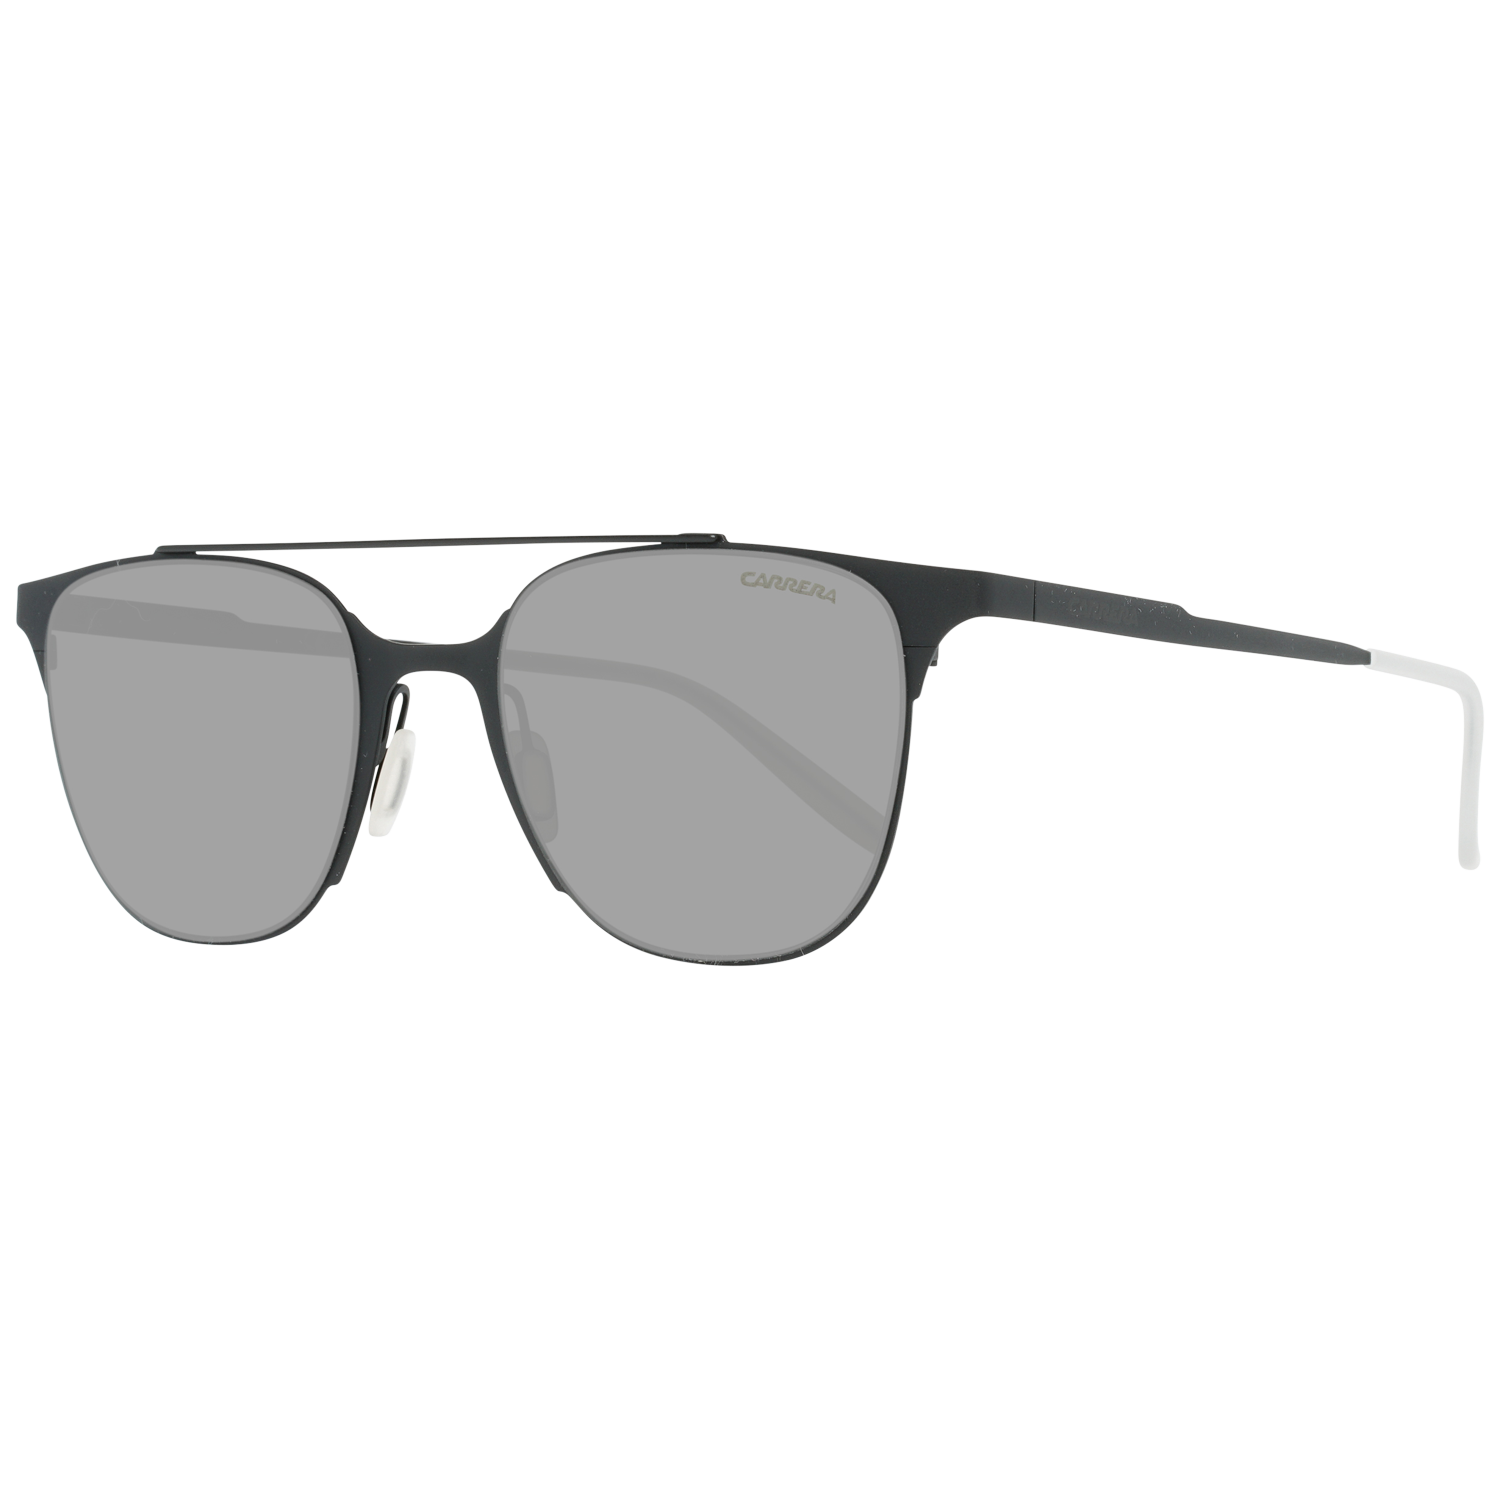 Carrera Sunglasses CA116/S 003/70 51